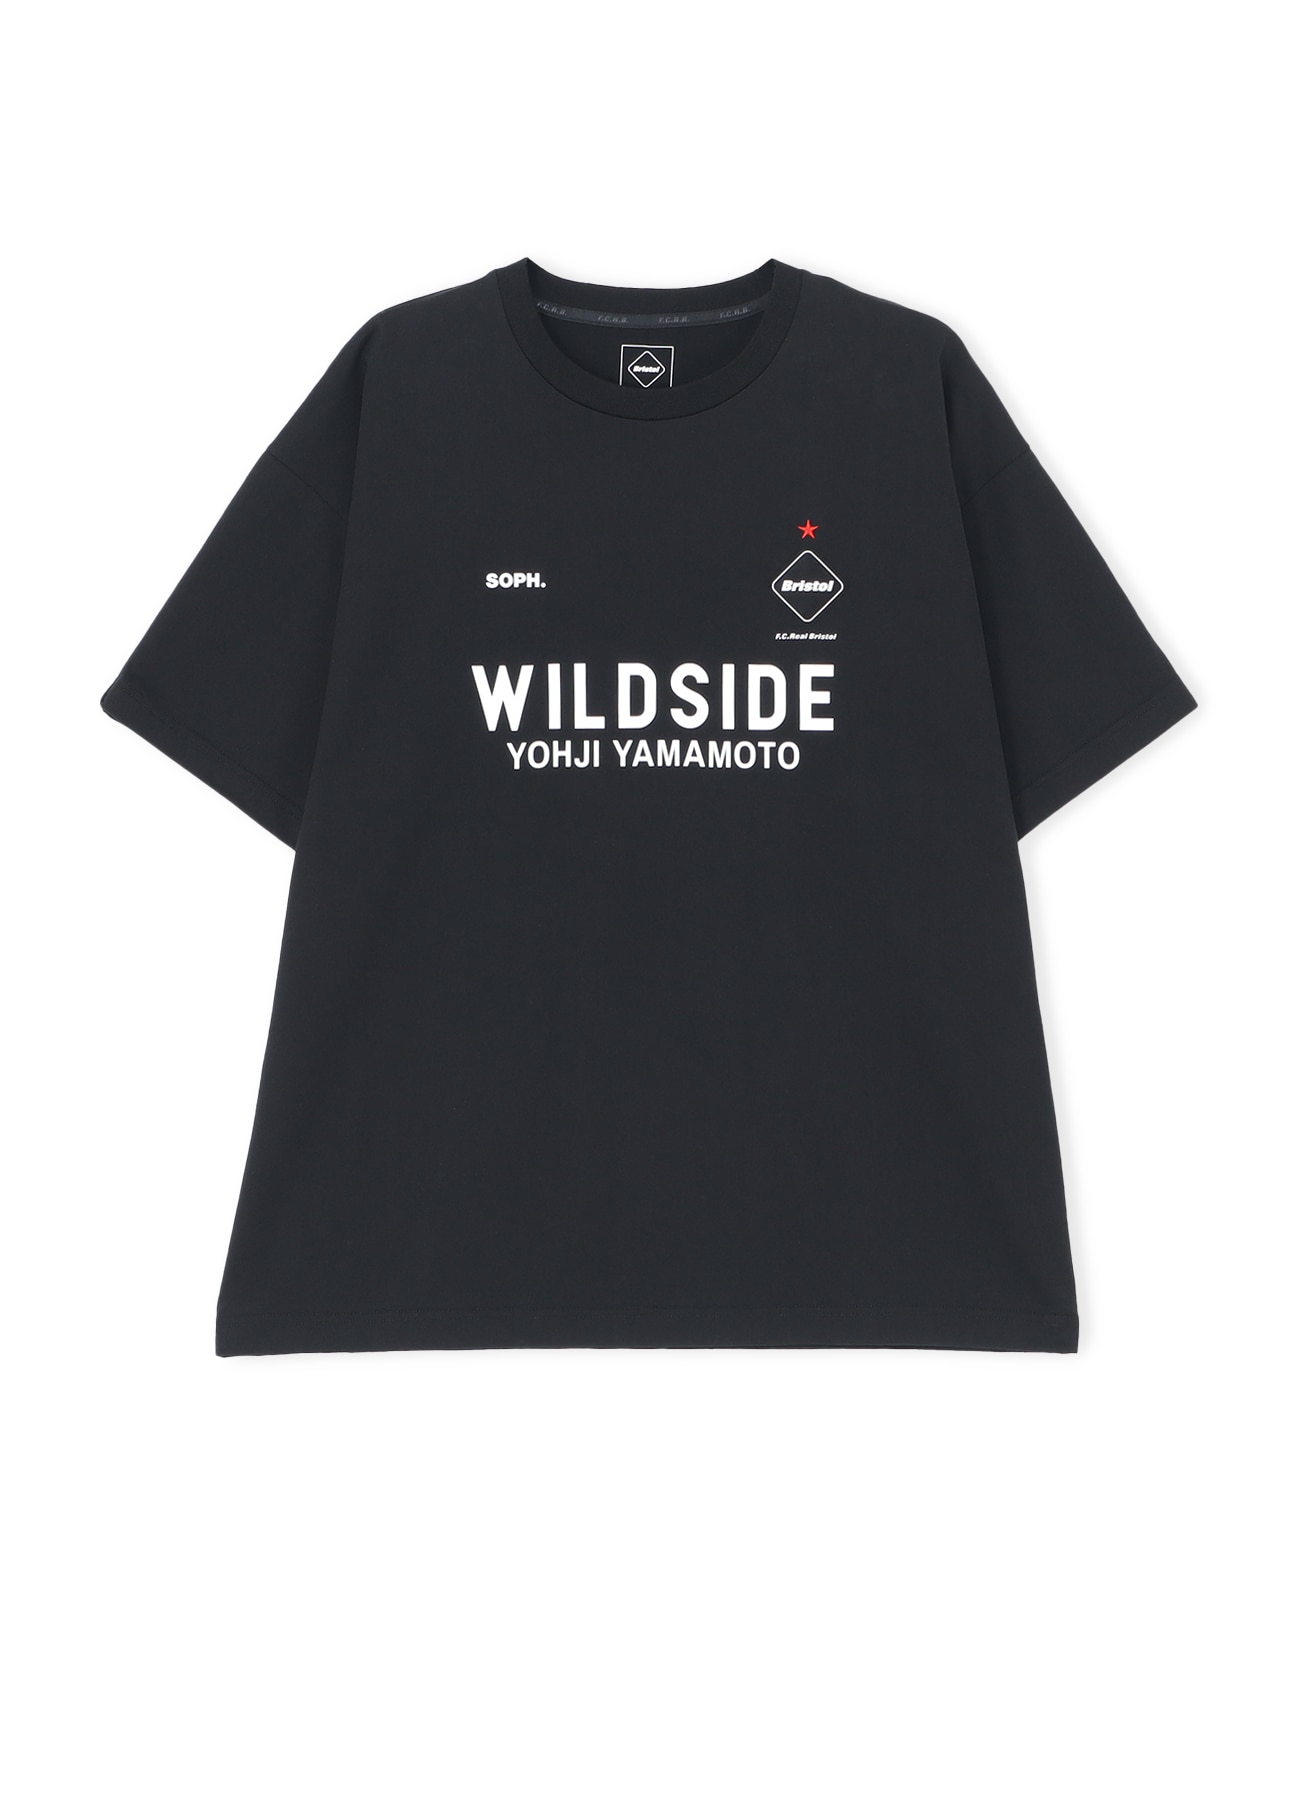 7/28 12:00 release] WILDSIDE x F.C. Real Bristol SPONSORED WIDE